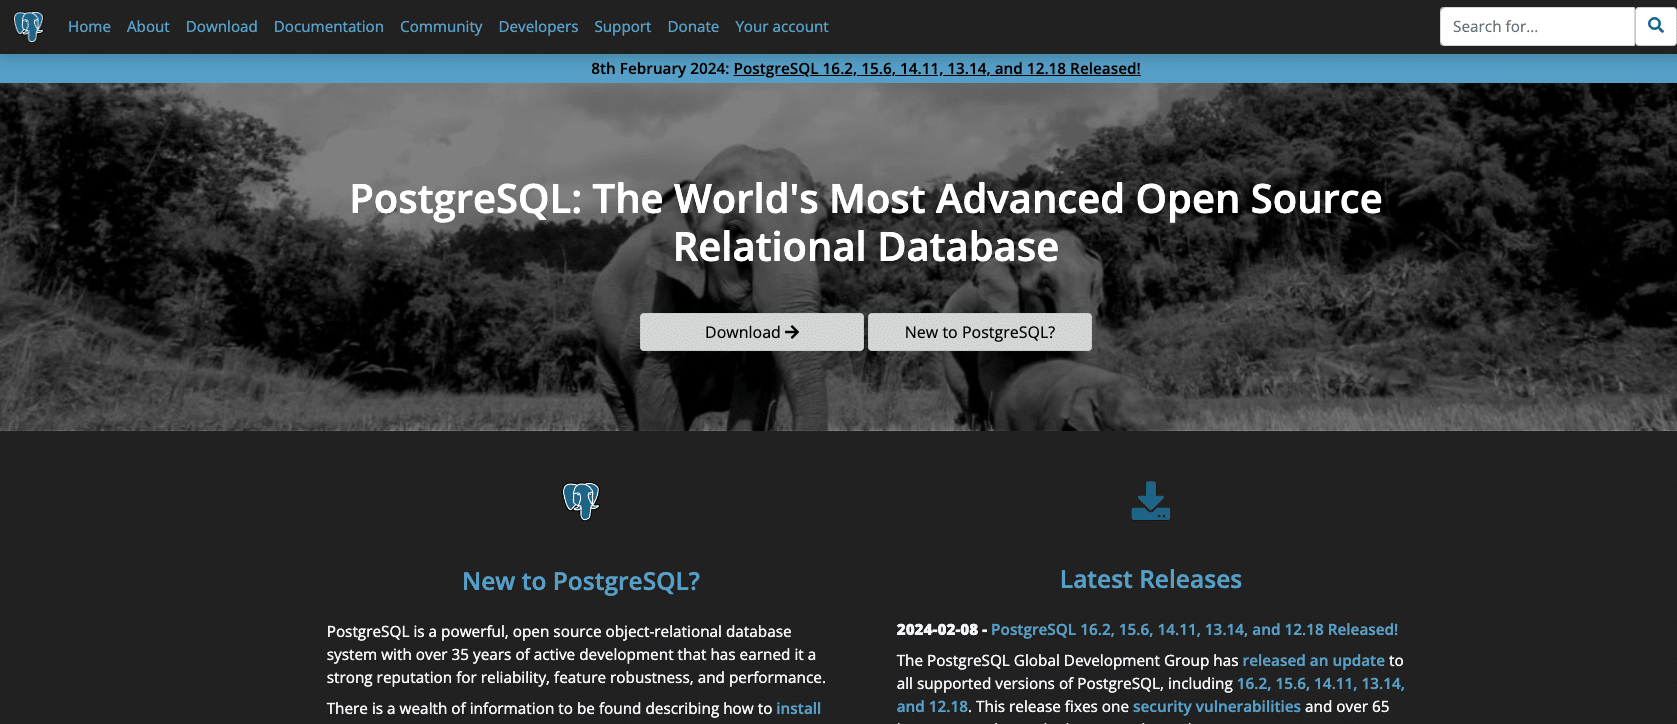 PostgreSQL: Open-source relational database for data warehousing